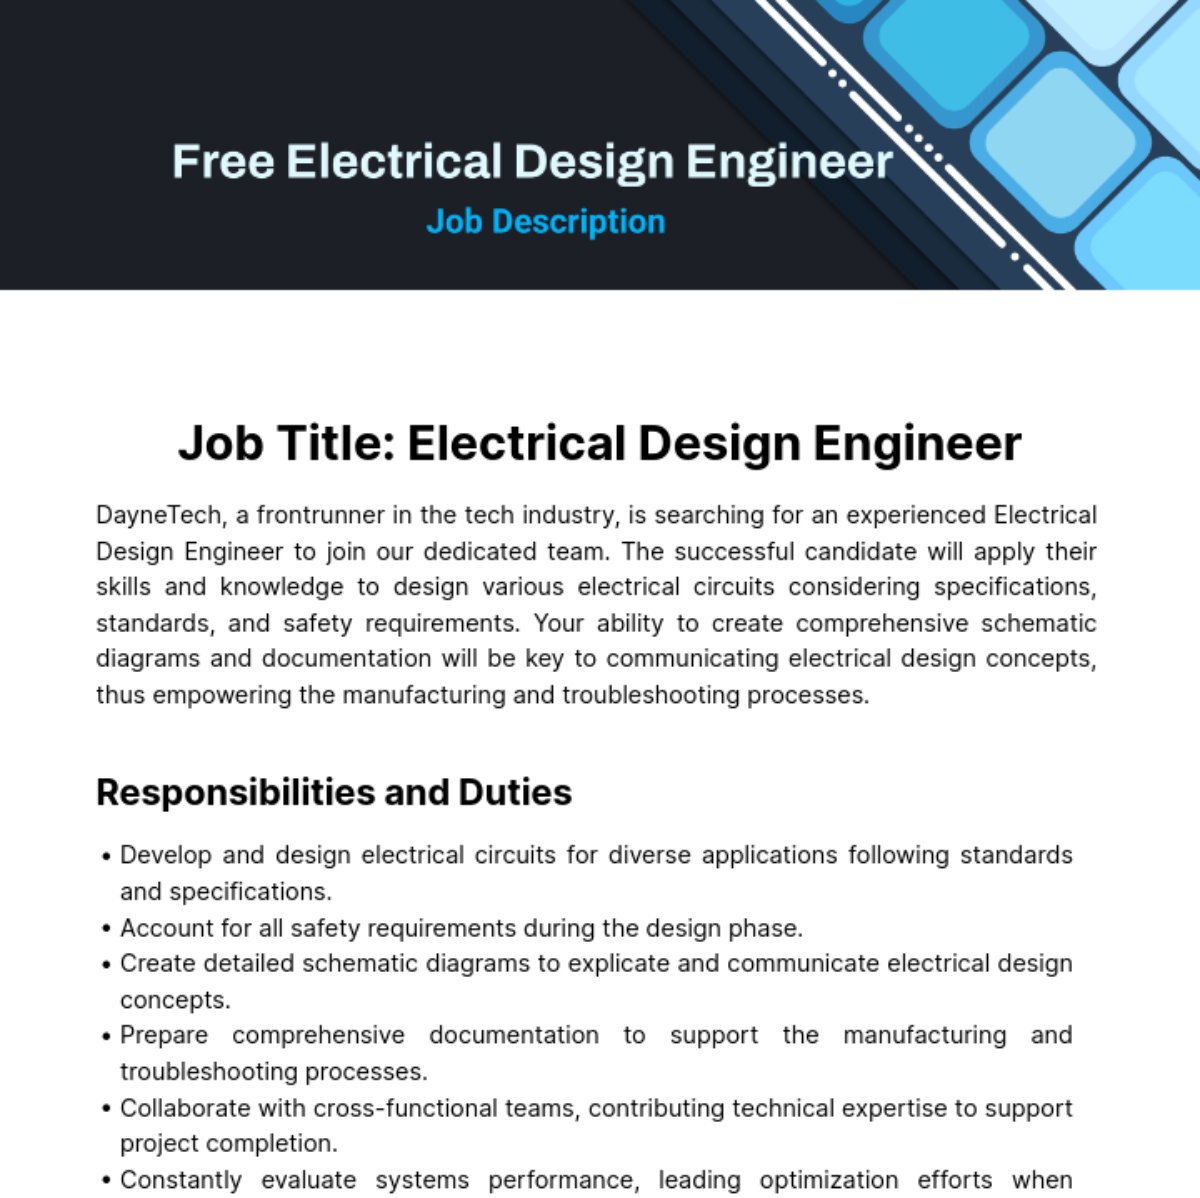 Free Electrical Design Job Description Template